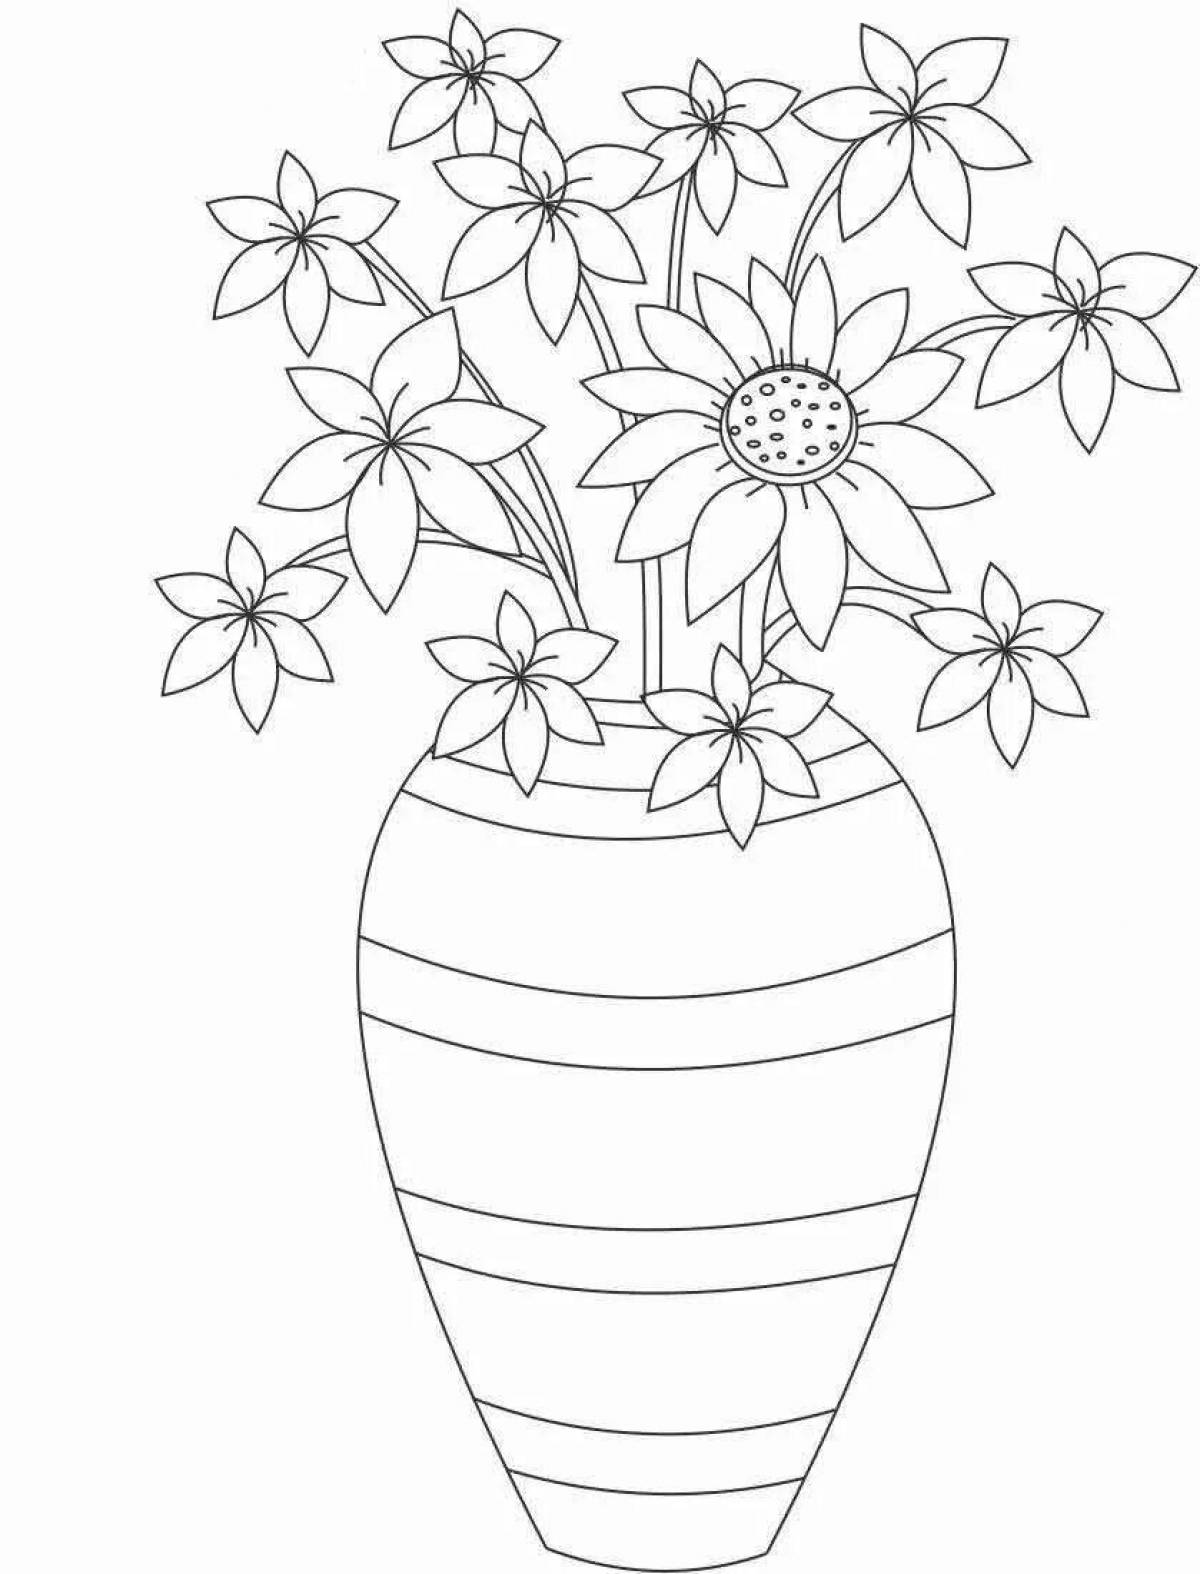 Delightful vase of flowers coloring book for children